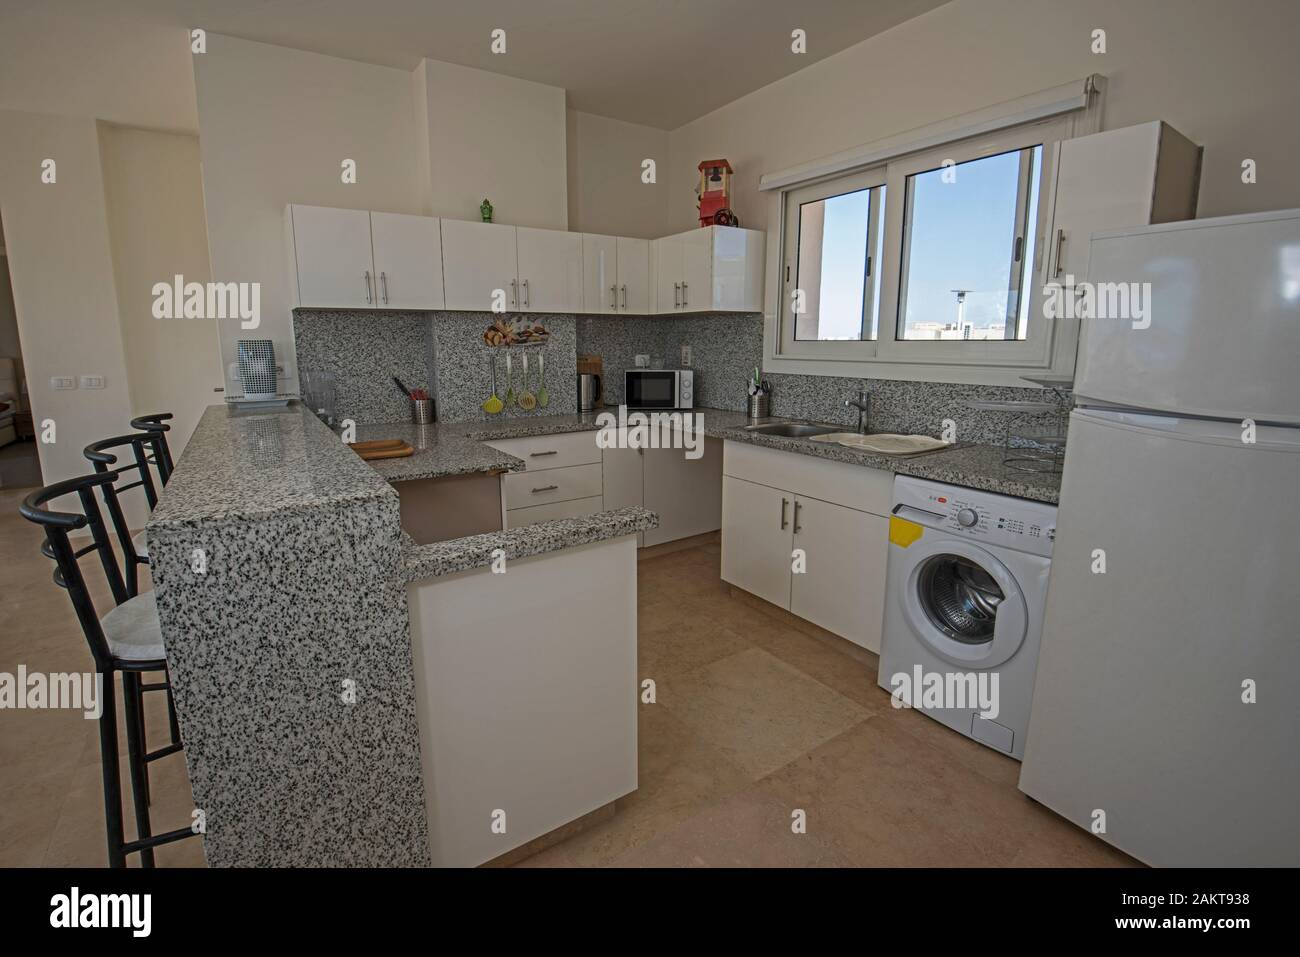 Kitchen in luxury villa show home showing interior design decor furnishing with breakfast bar Stock Photo